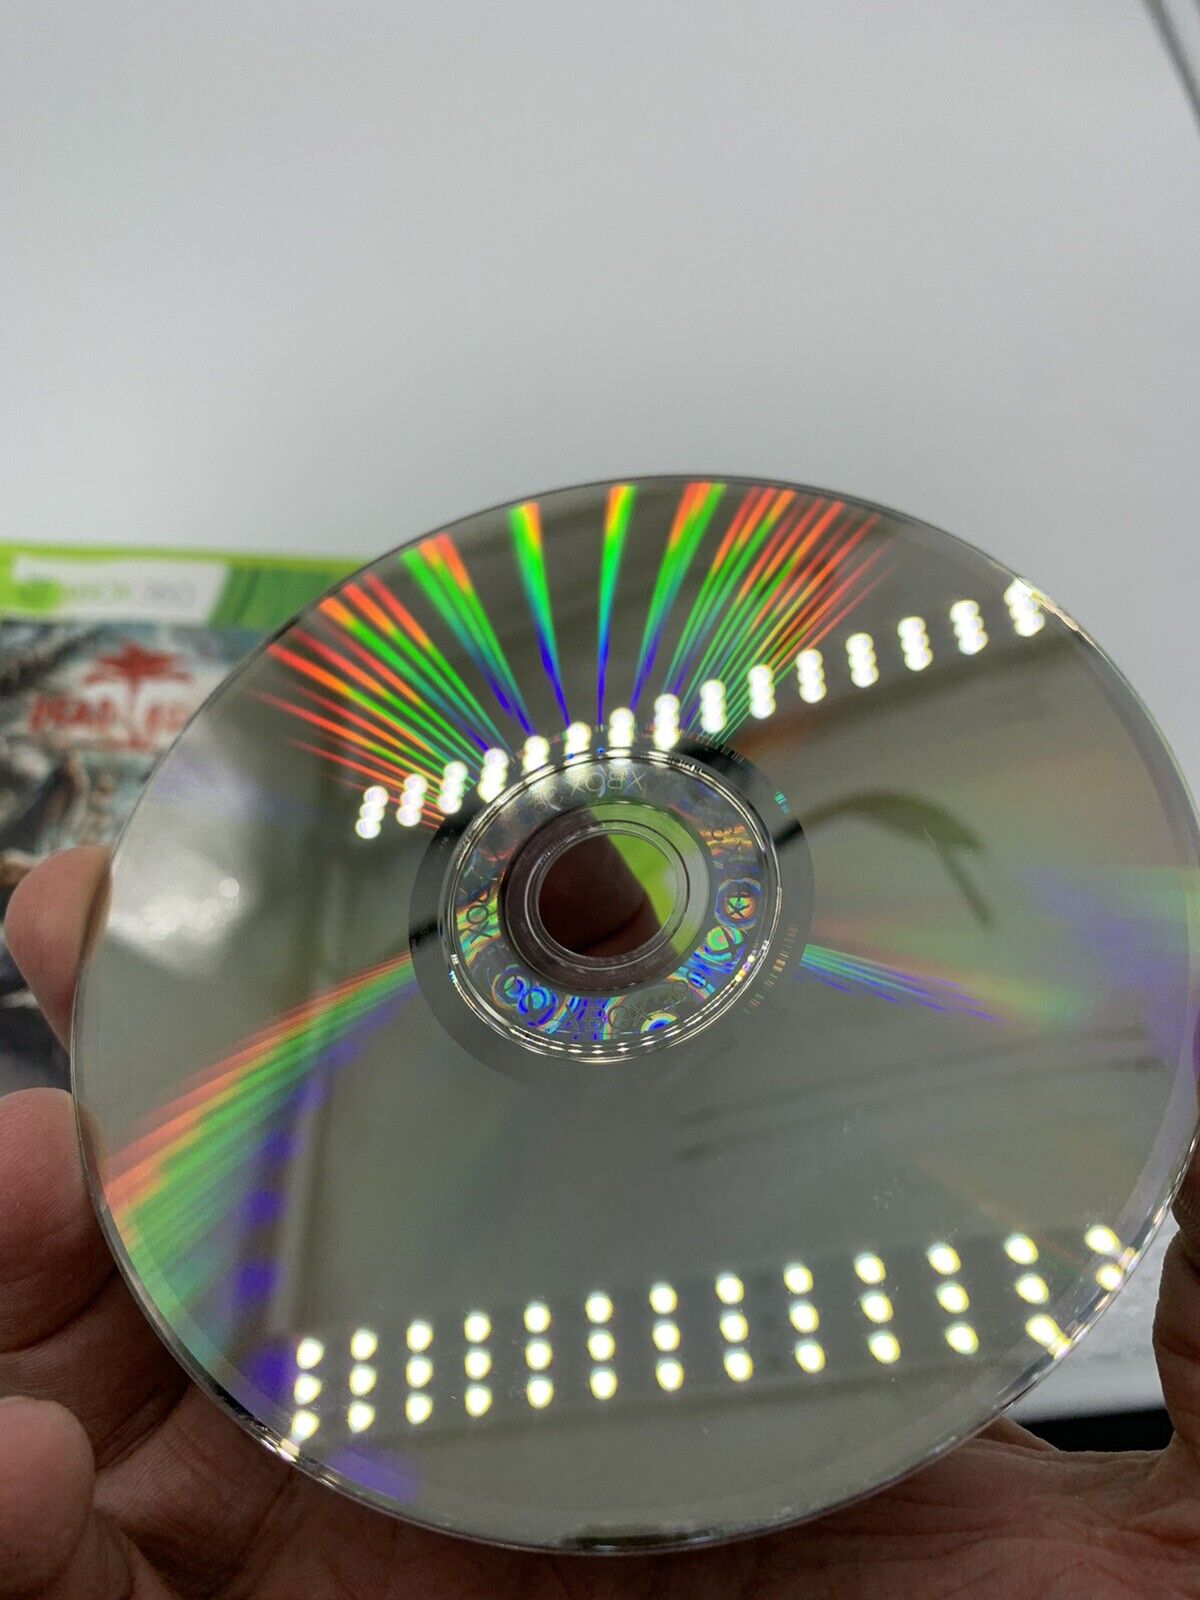 Dead Island (Microsoft Xbox 360, 2011)